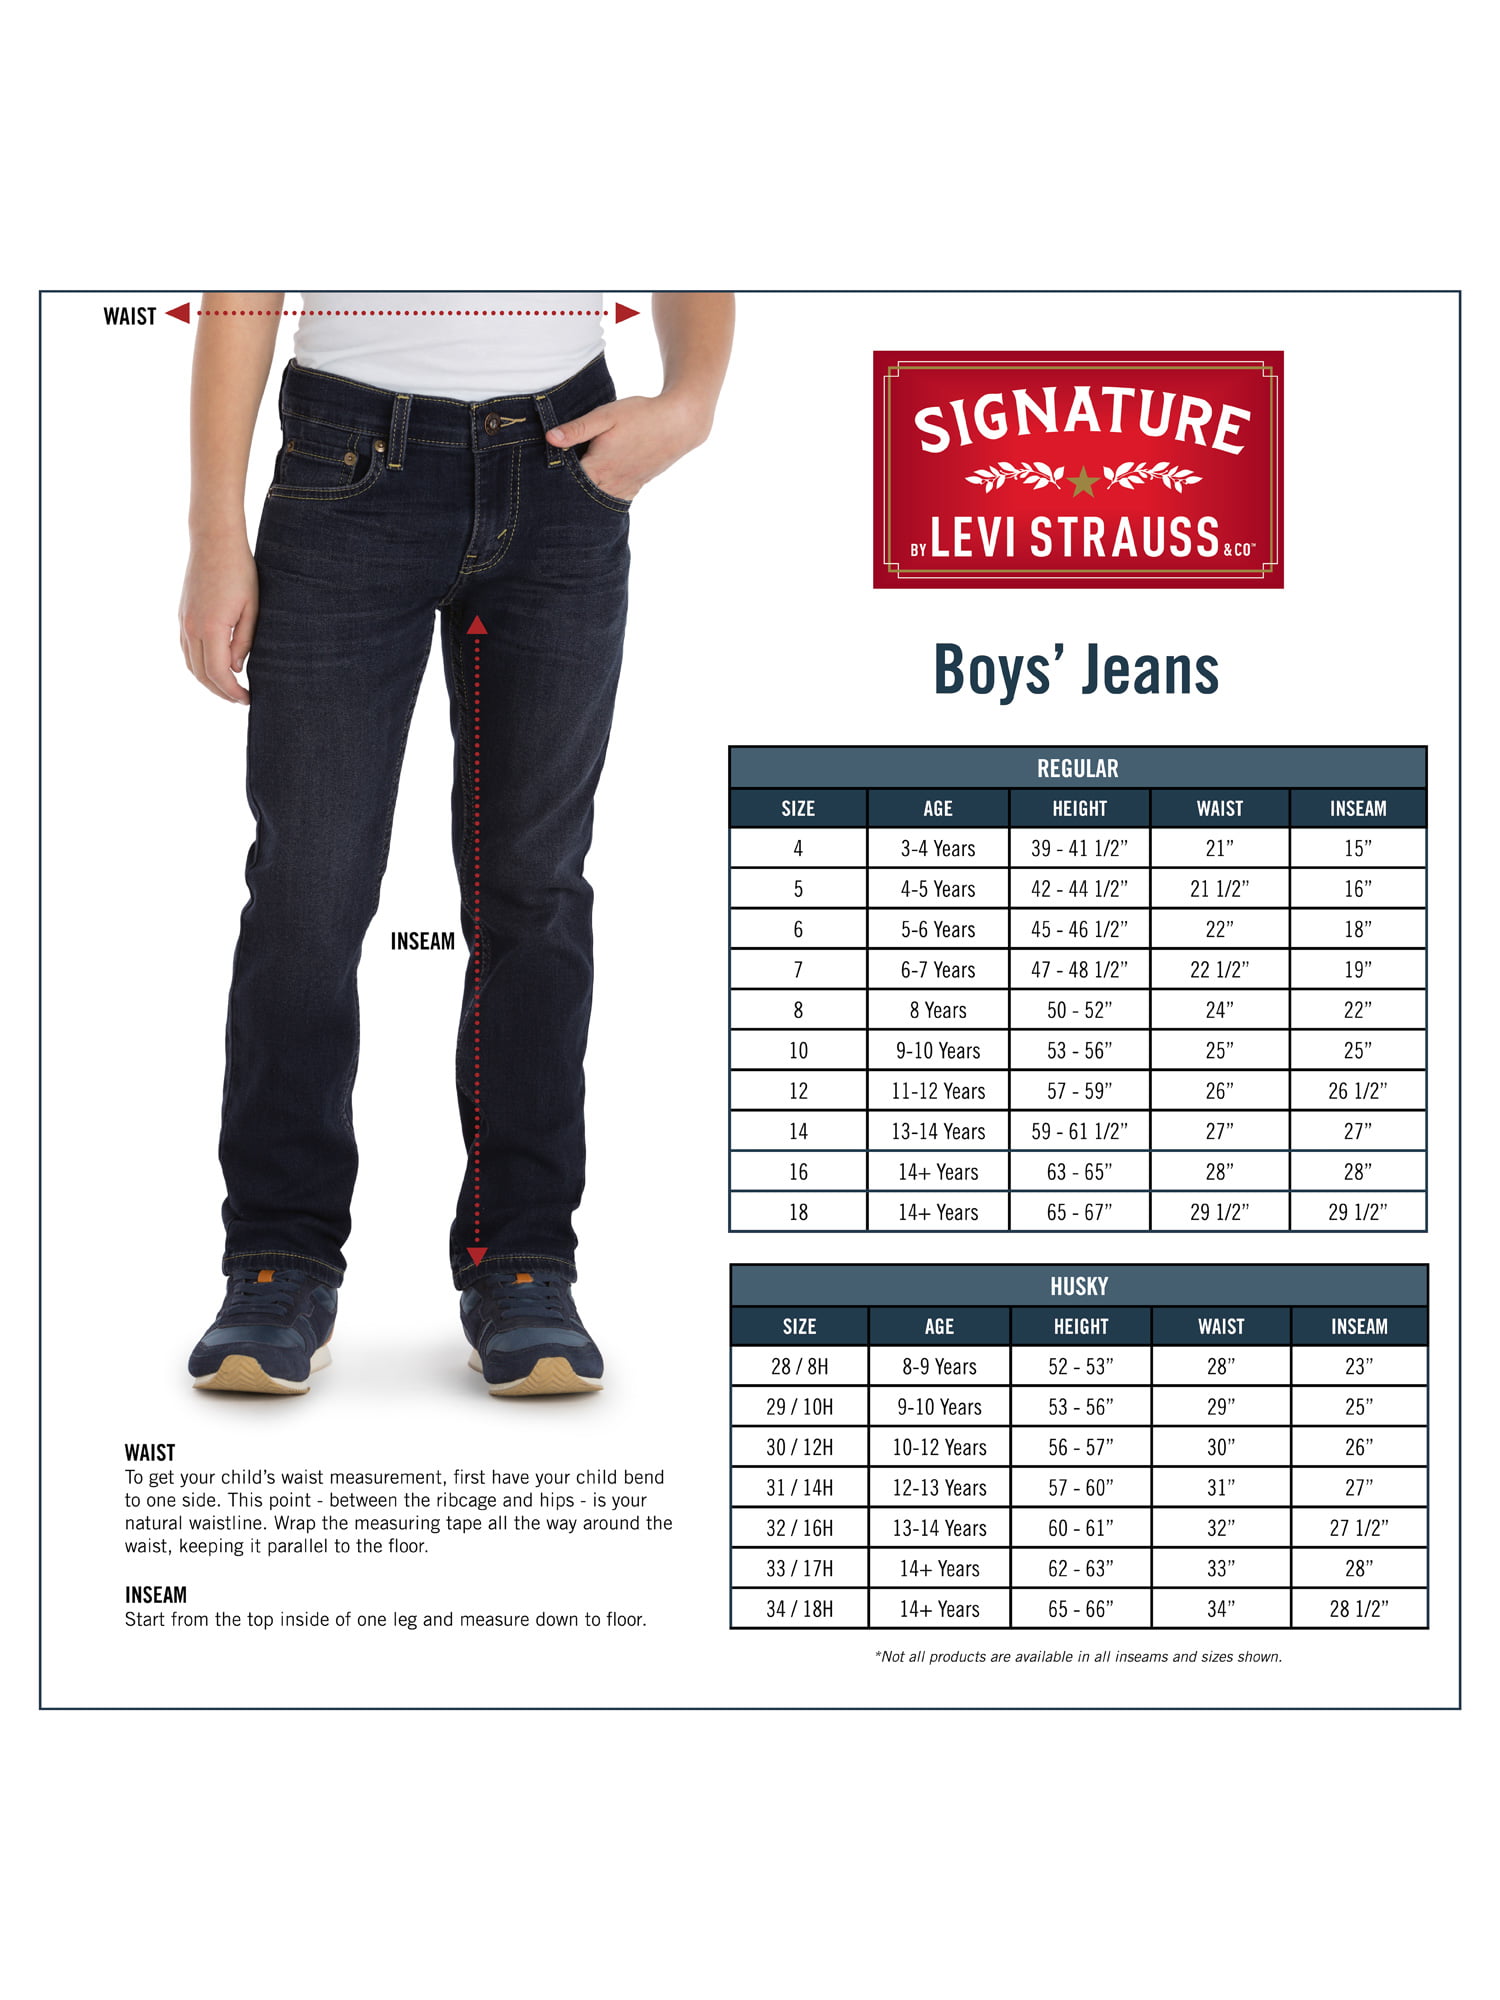 levi strauss signature jeans size chart